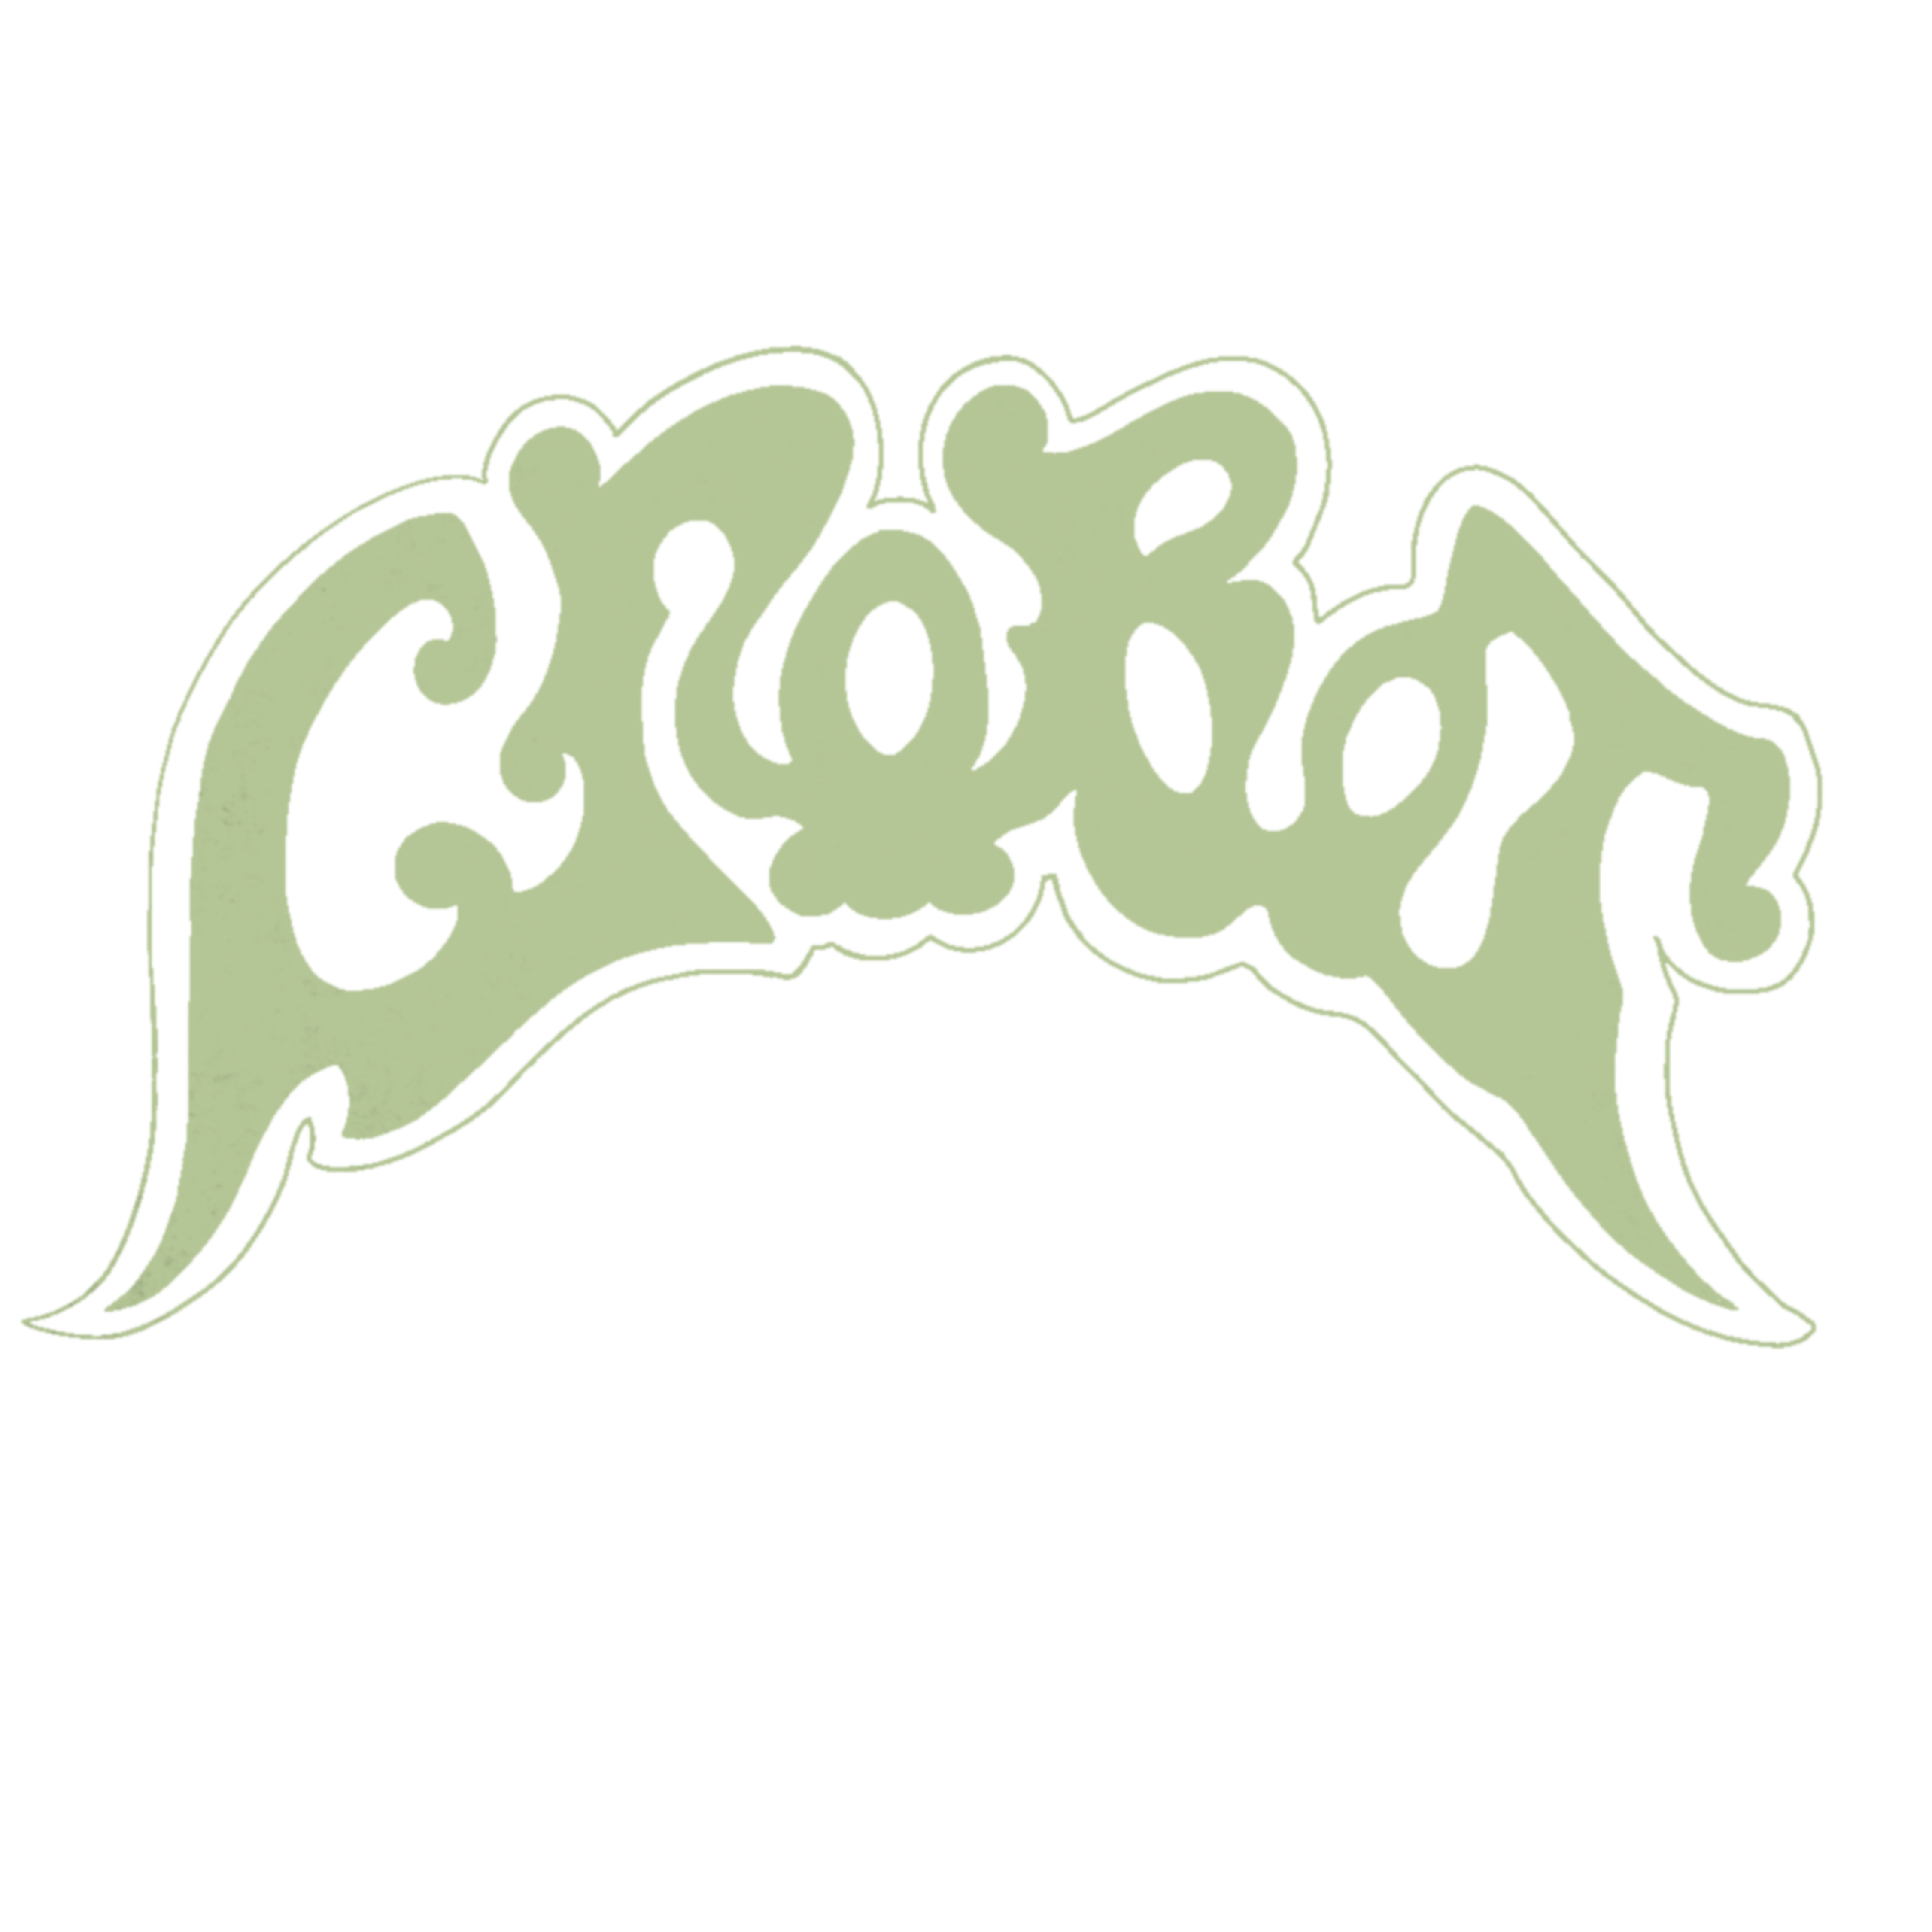 Crobot Logo